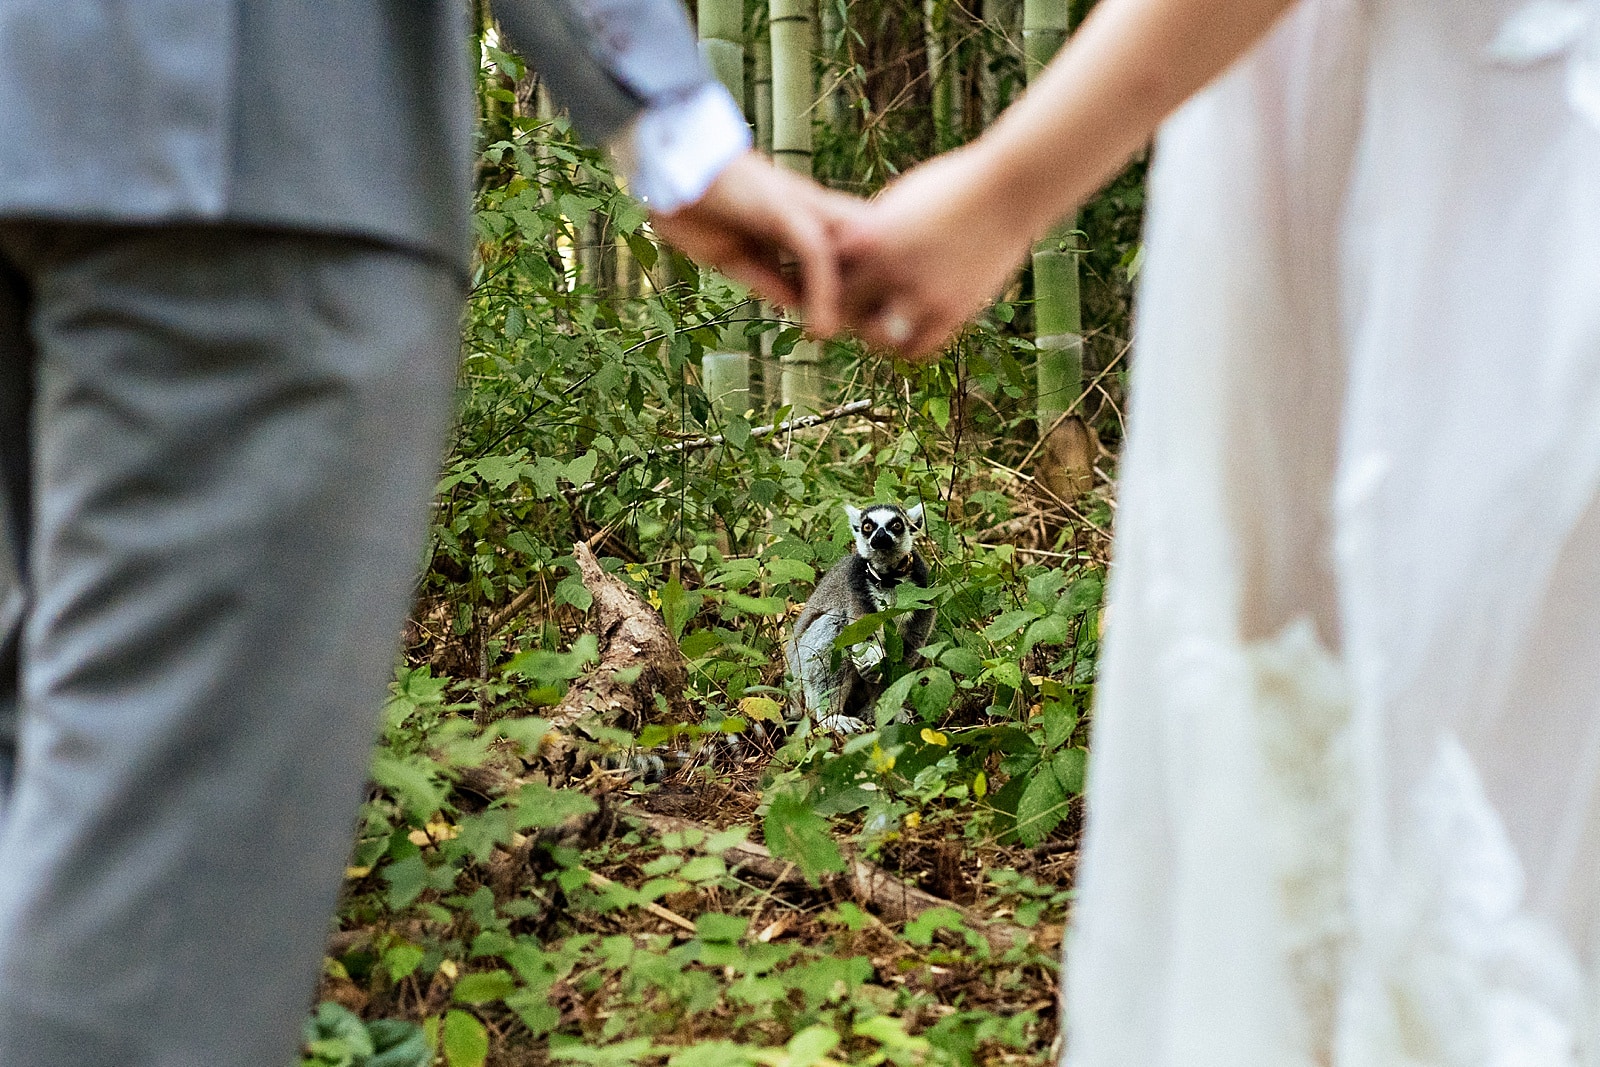 Duke Lemur Center wedding - one of the most unique wedding ideas!